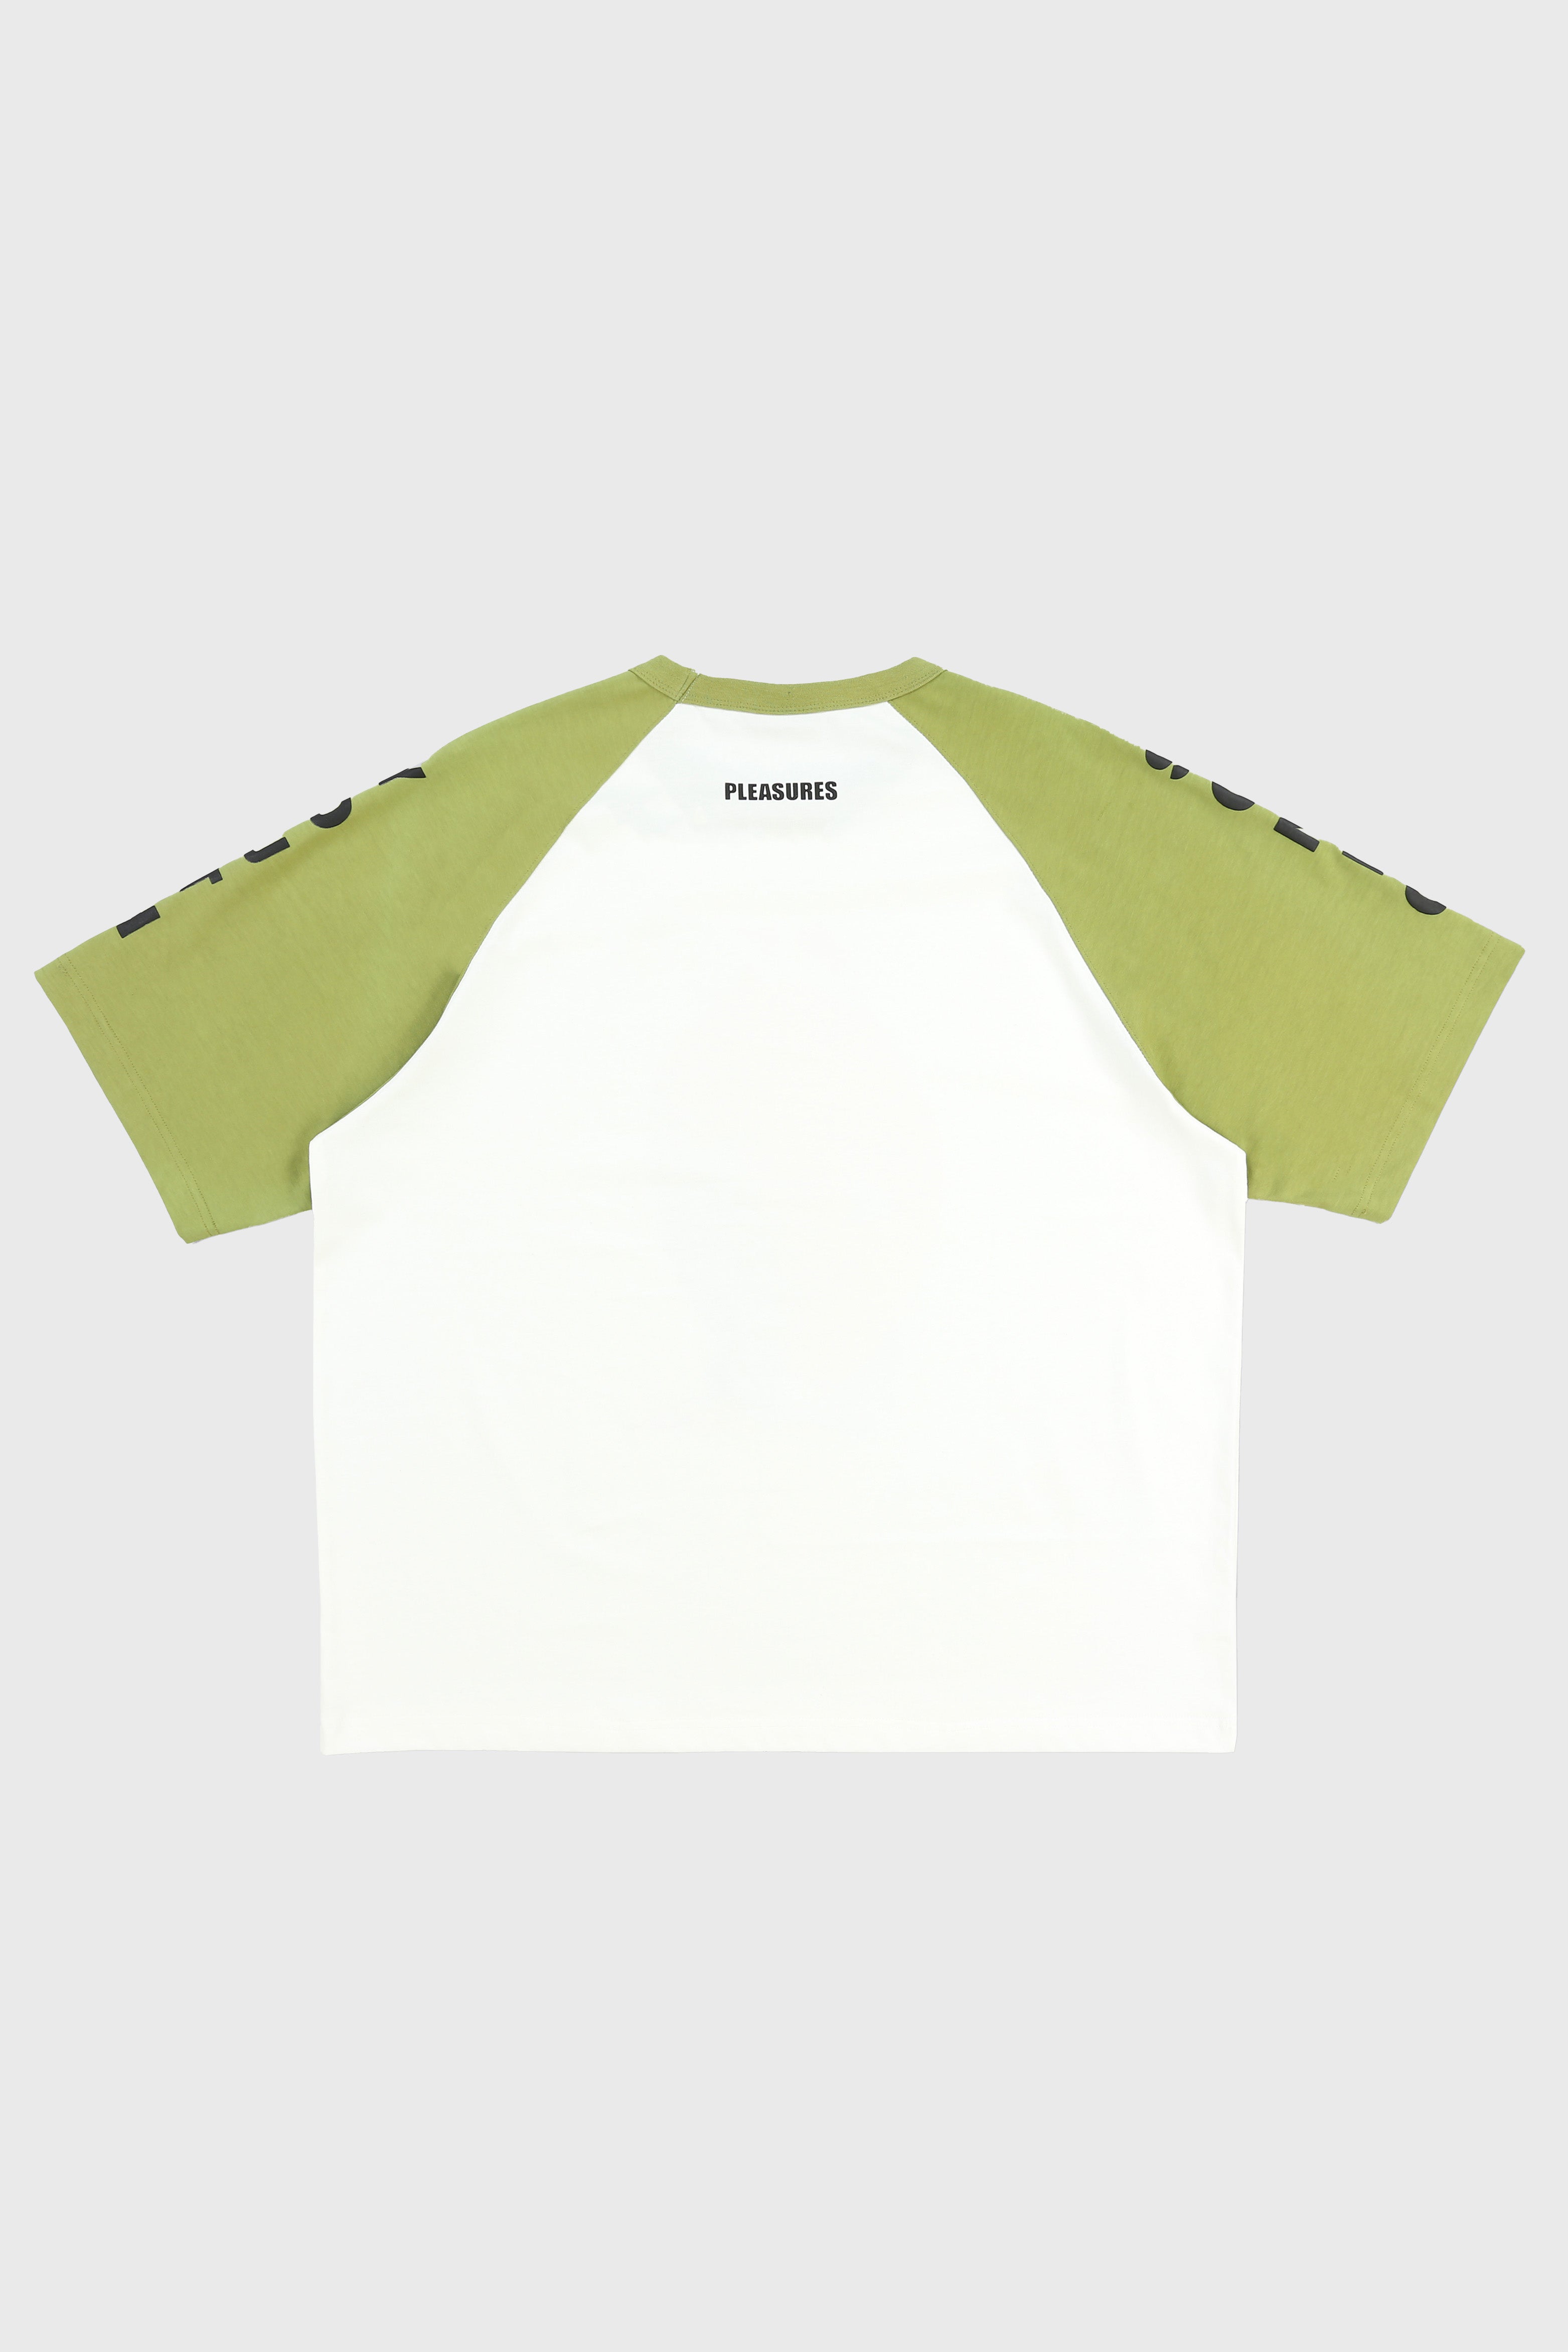 Selectshop FRAME - PLEASURES Alien Raglan Tee T-Shirts Concept Store Dubai